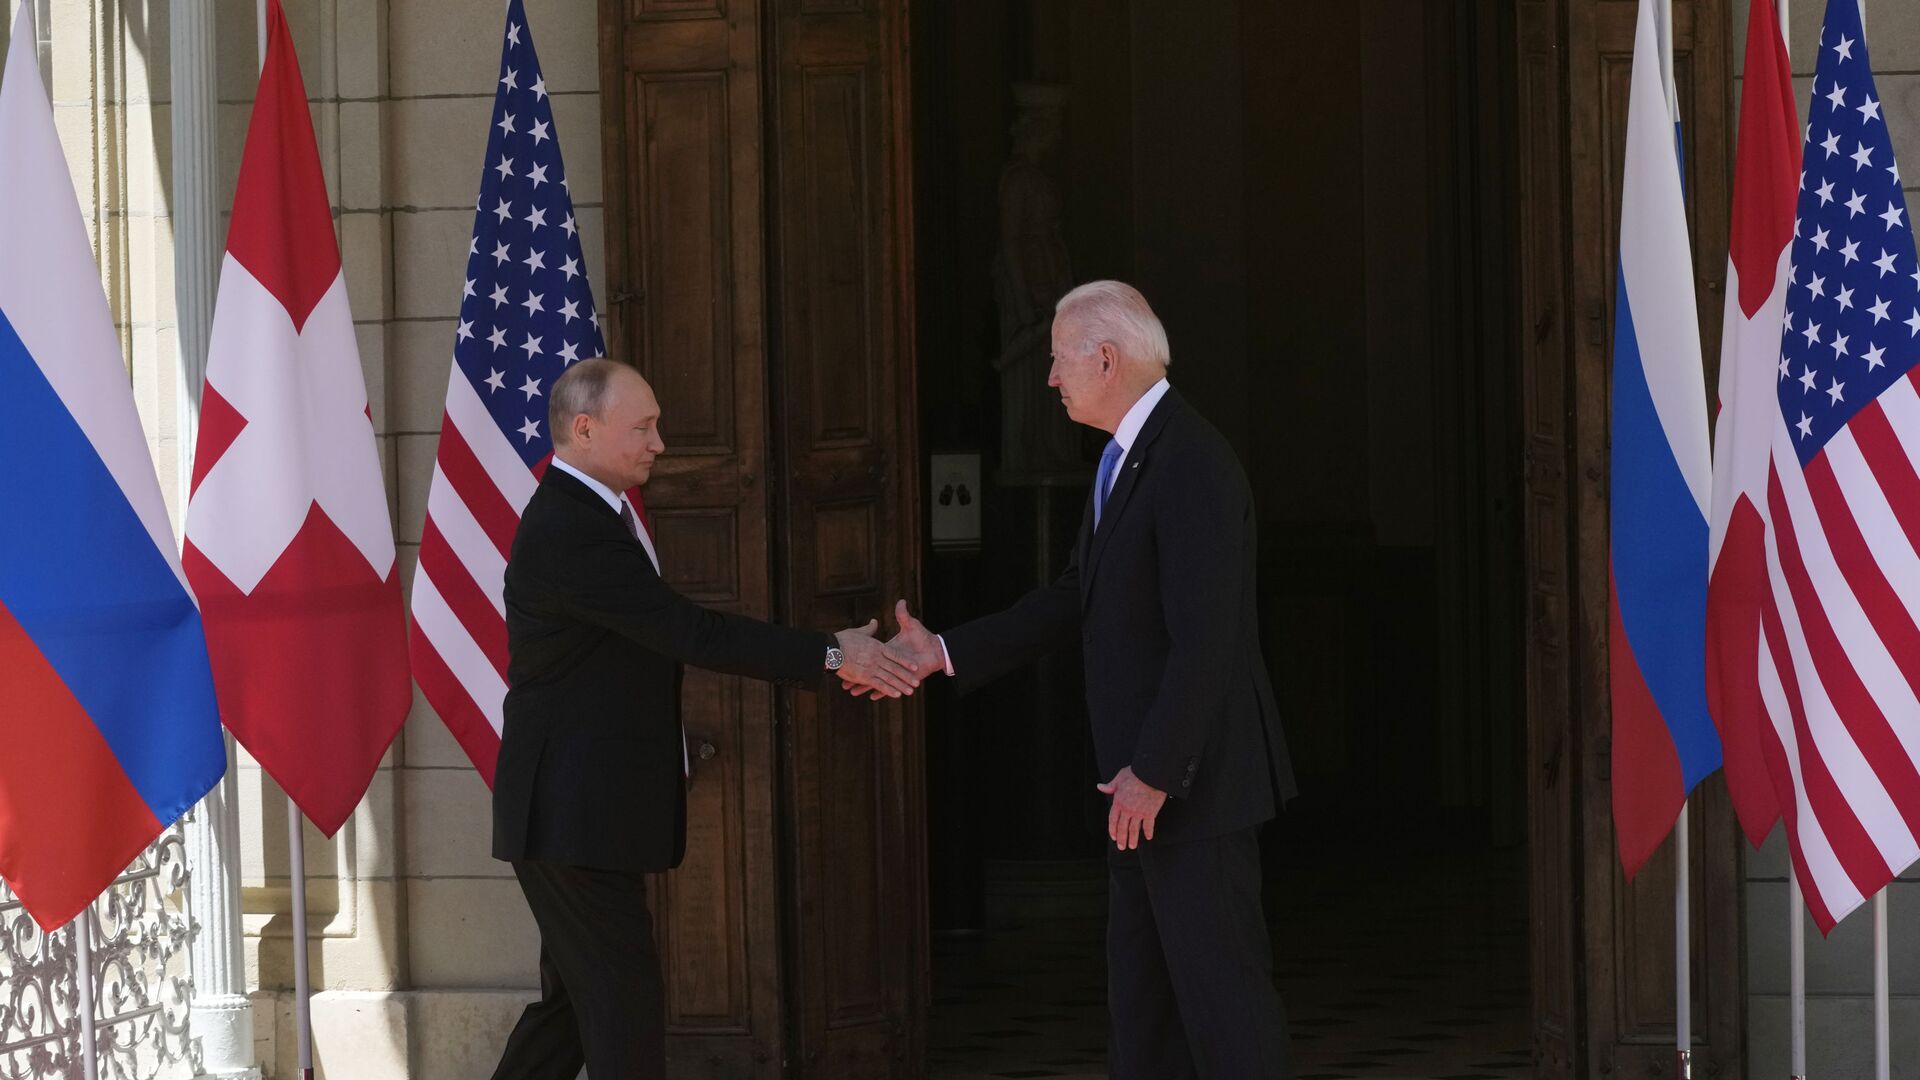 Russian President Vladimir Putin, left, and U.S President Joe Biden shake hands during their meeting at the 'Villa la Grange' in Geneva, Switzerland in Geneva, Switzerland, Wednesday, June 16, 2021 - Sputnik International, 1920, 17.06.2021